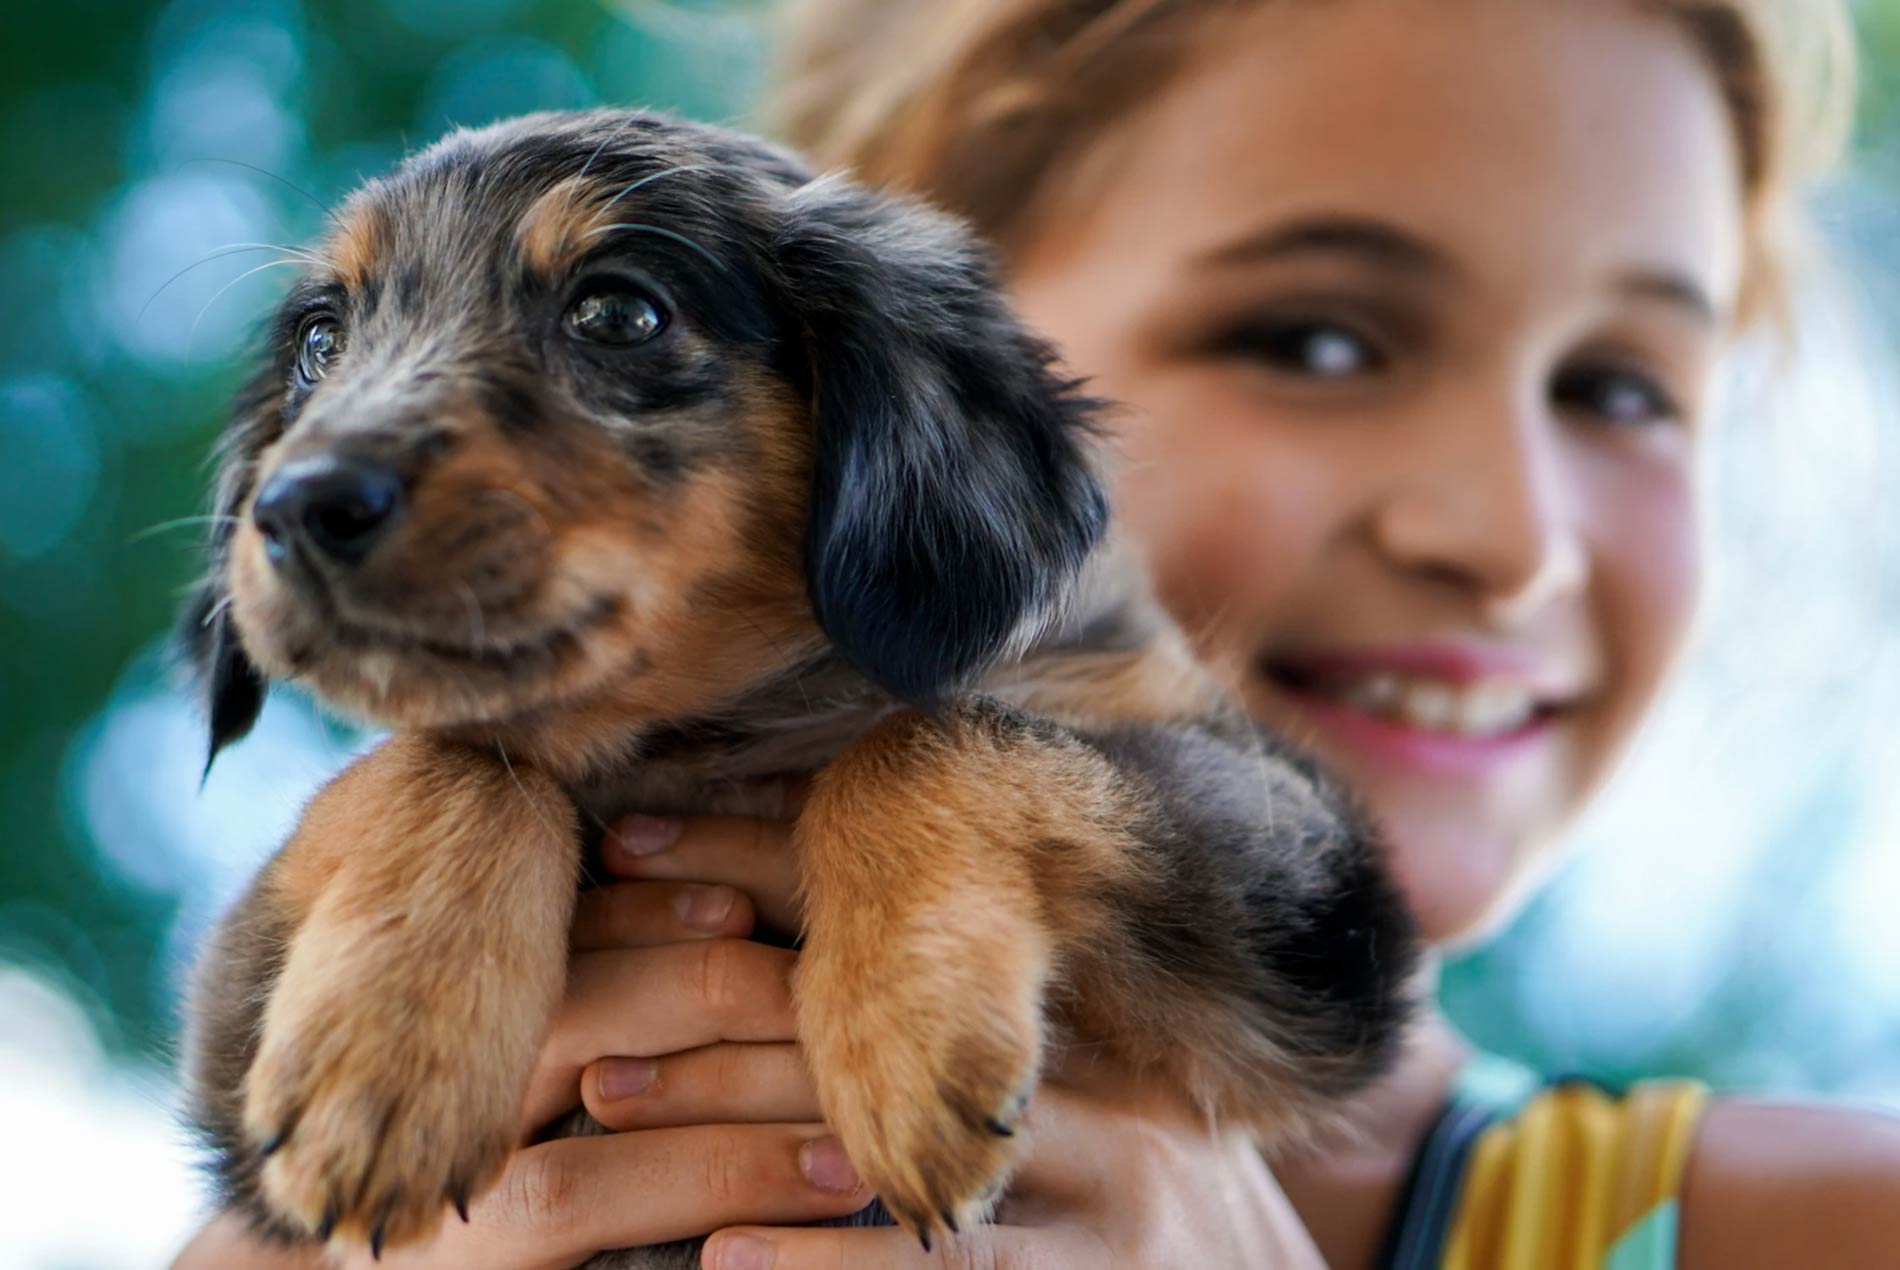 Benefits of having pets in children’s social-emotional development